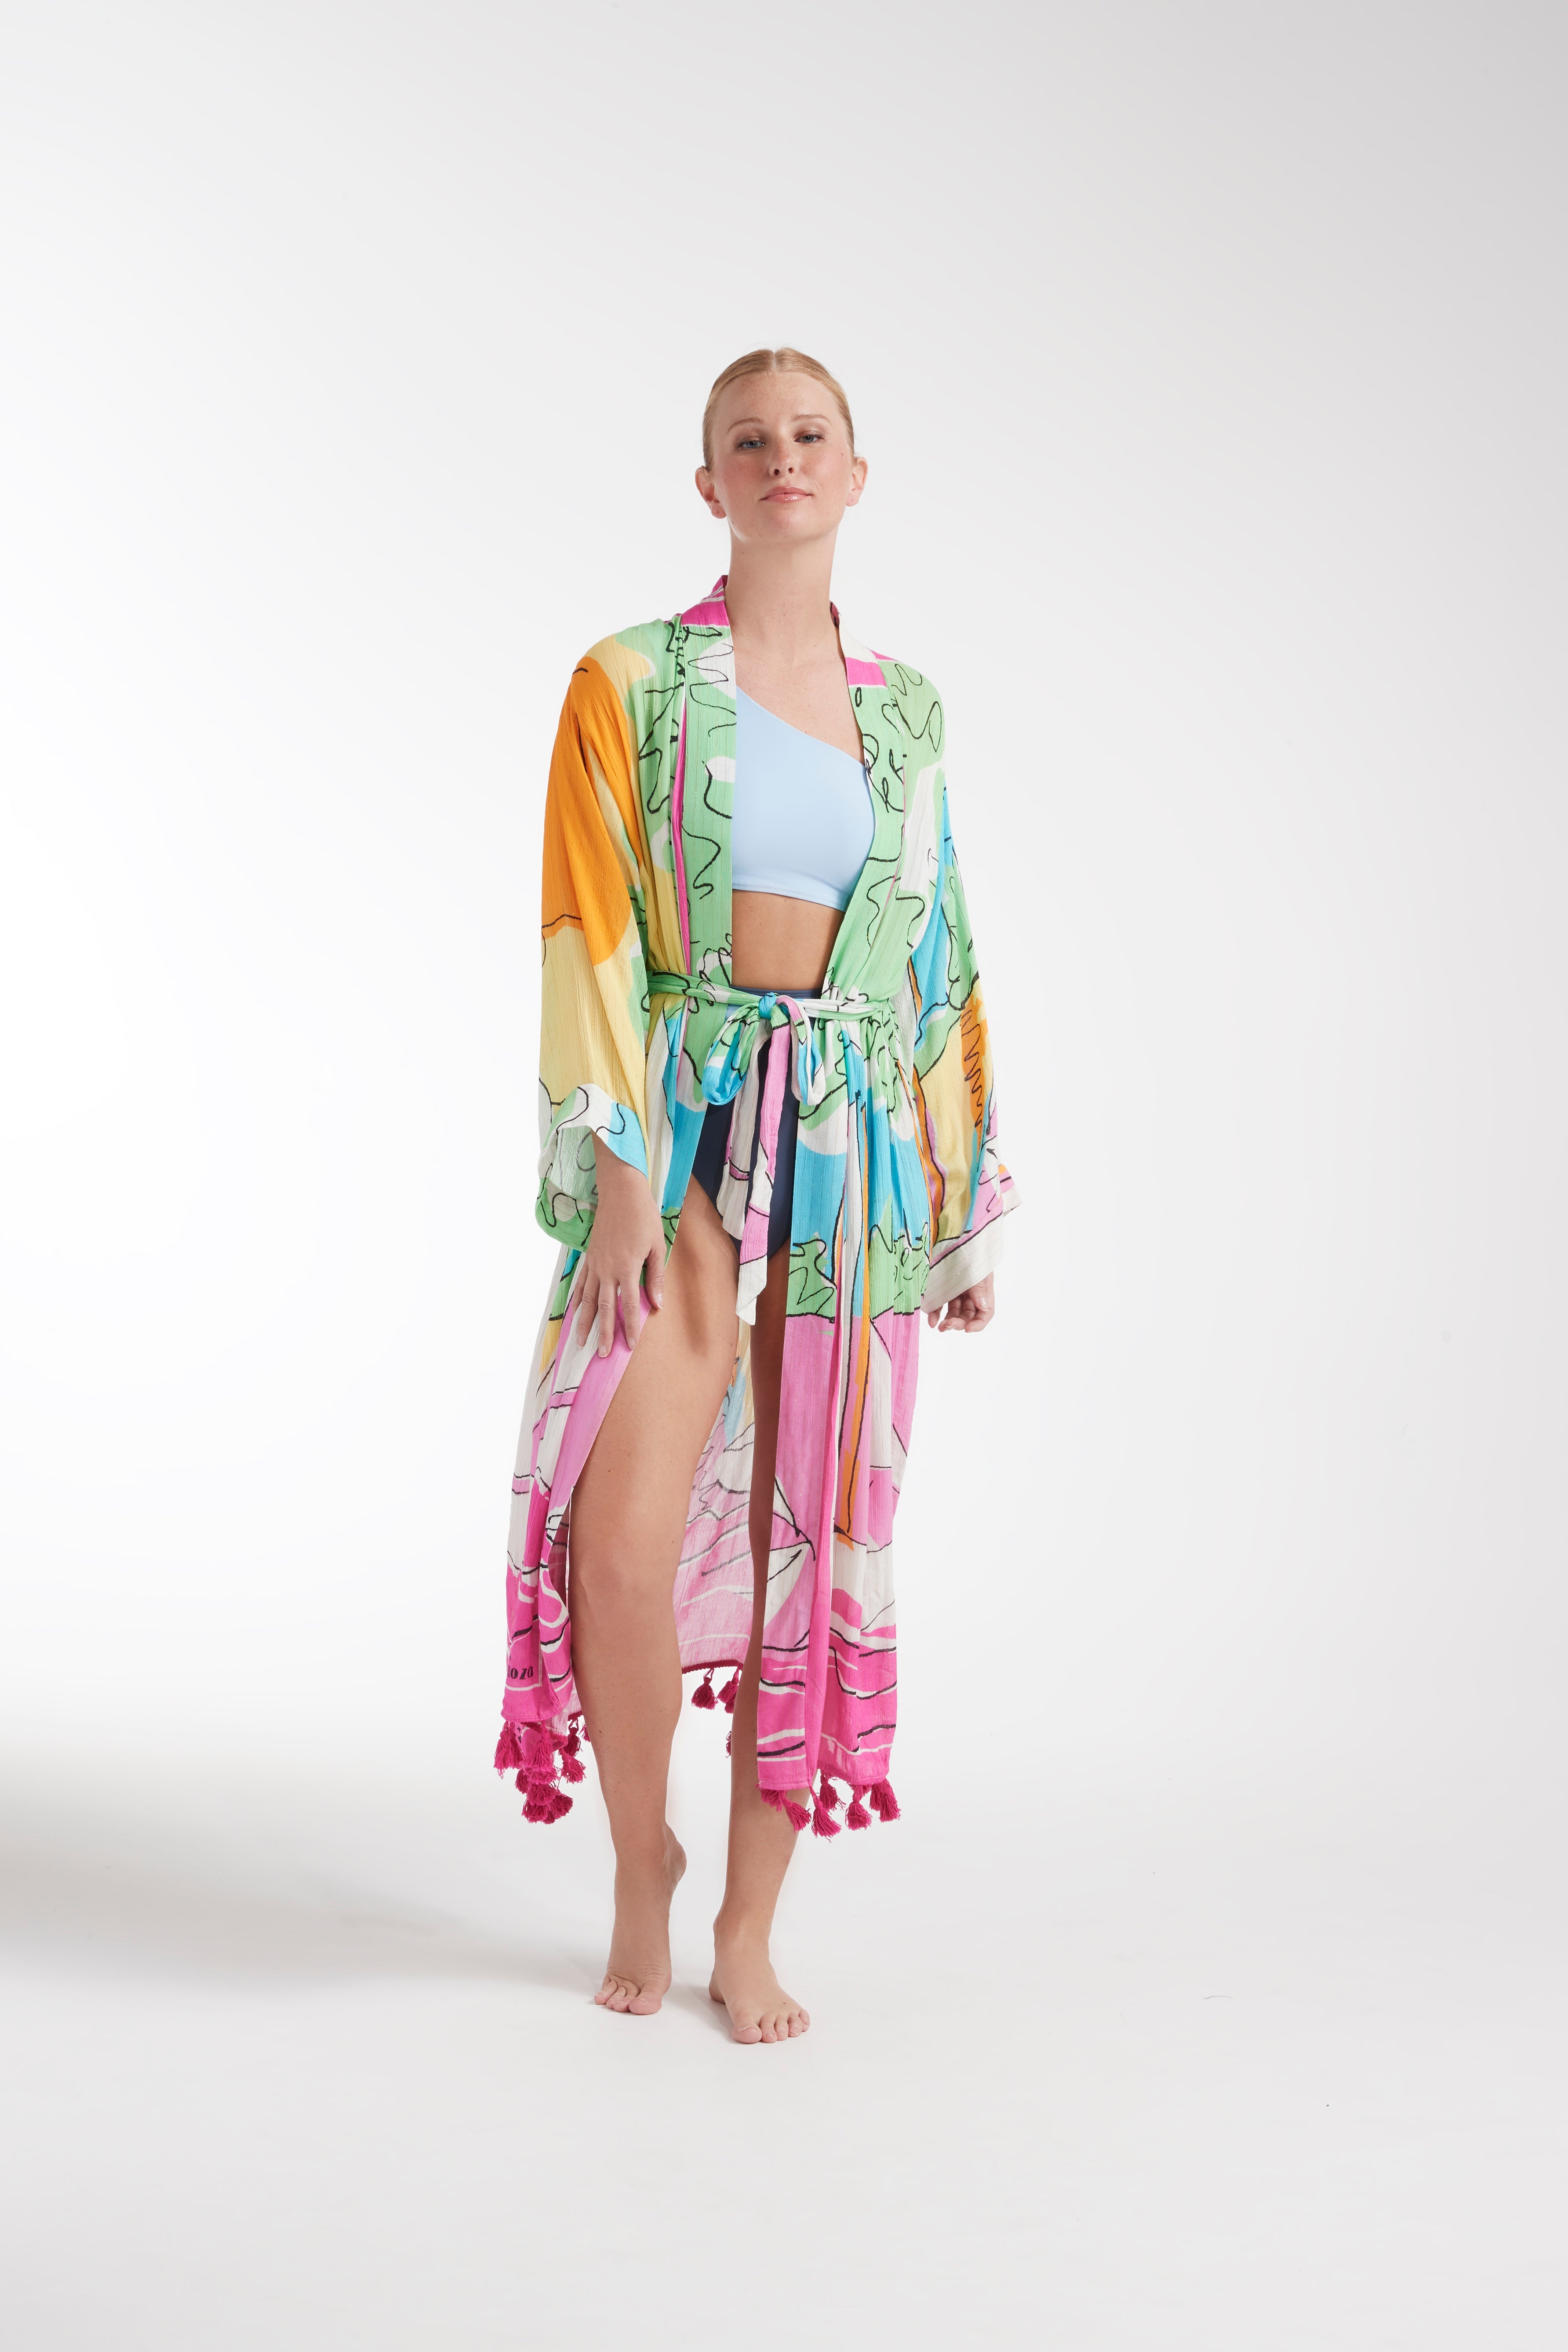 Noelle Fringe Robe by Hermoza